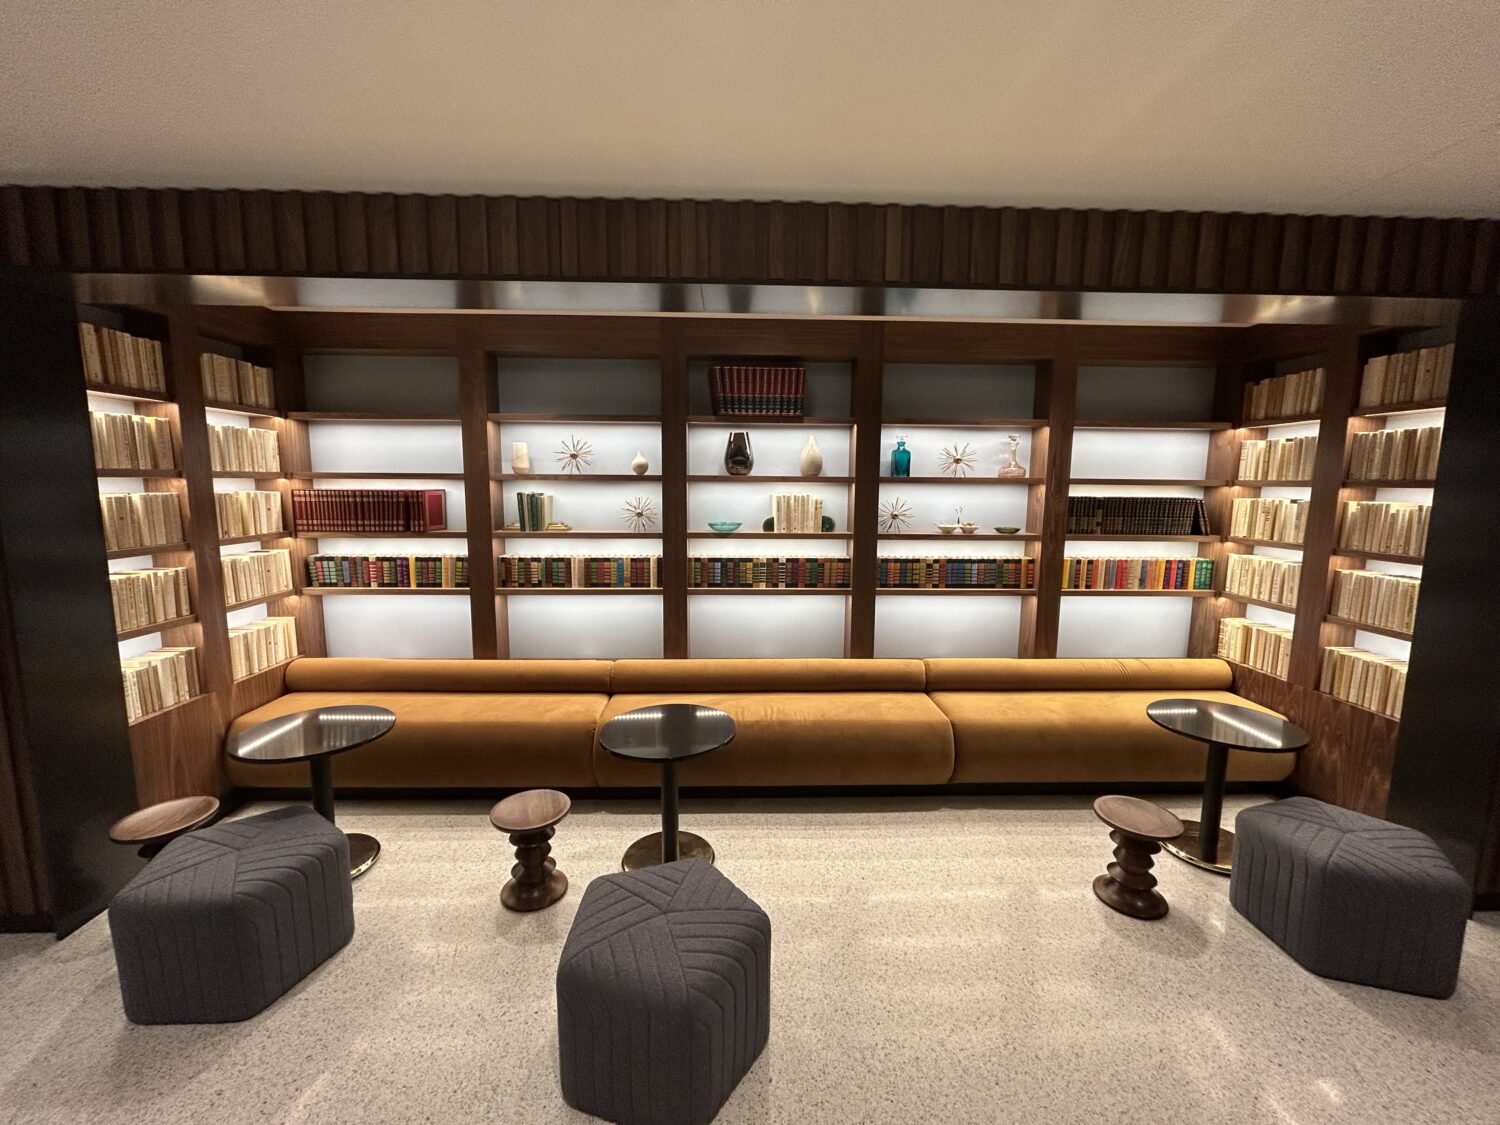 Hotel Indigo library